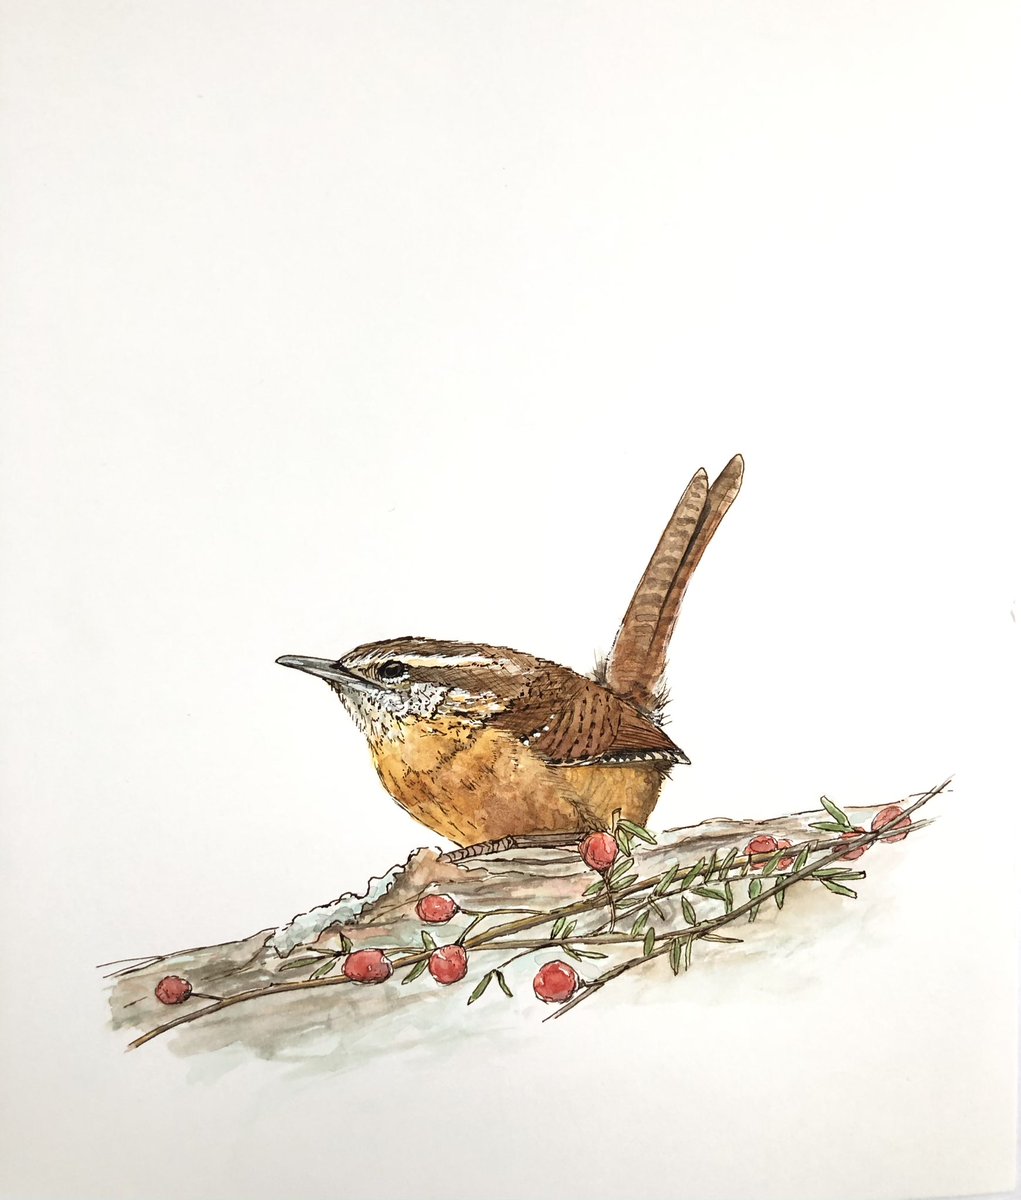 A fancy Carolina Wren for November’s #birdwhispererproject 

#birdwhisperer @BirdWhisperers  #watercolourandink #birdart